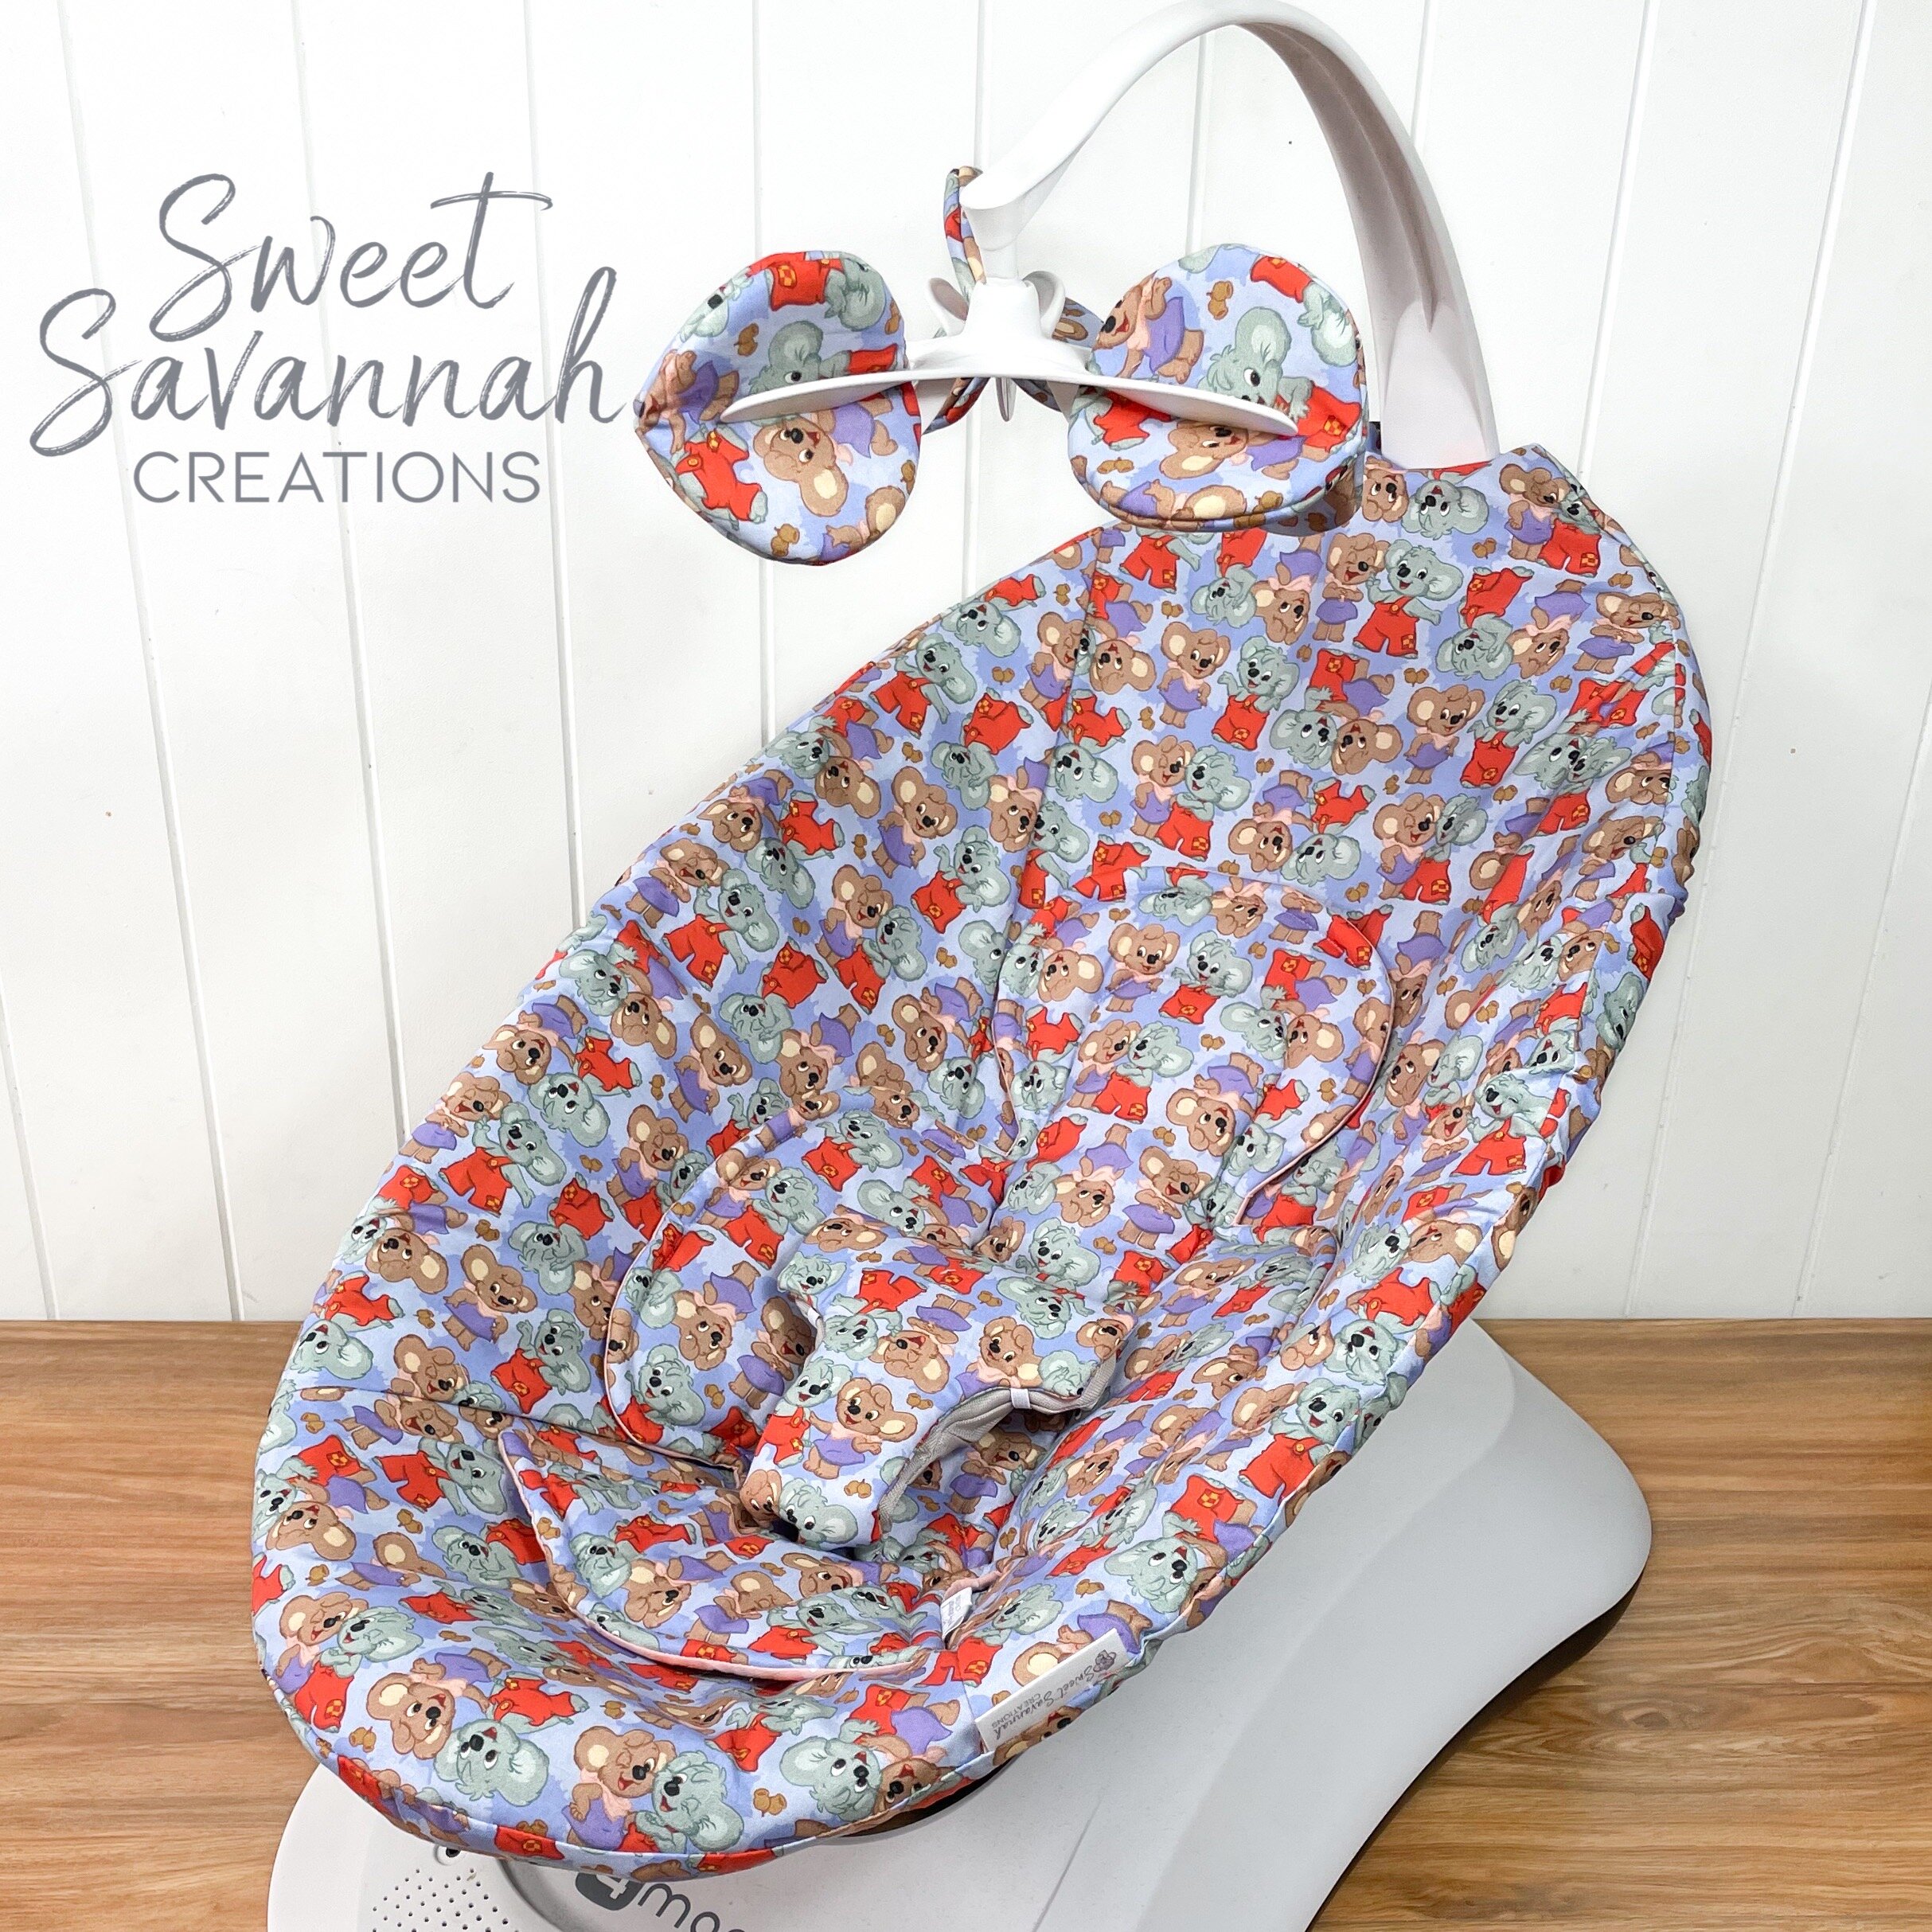 Sweet Savannah Creations